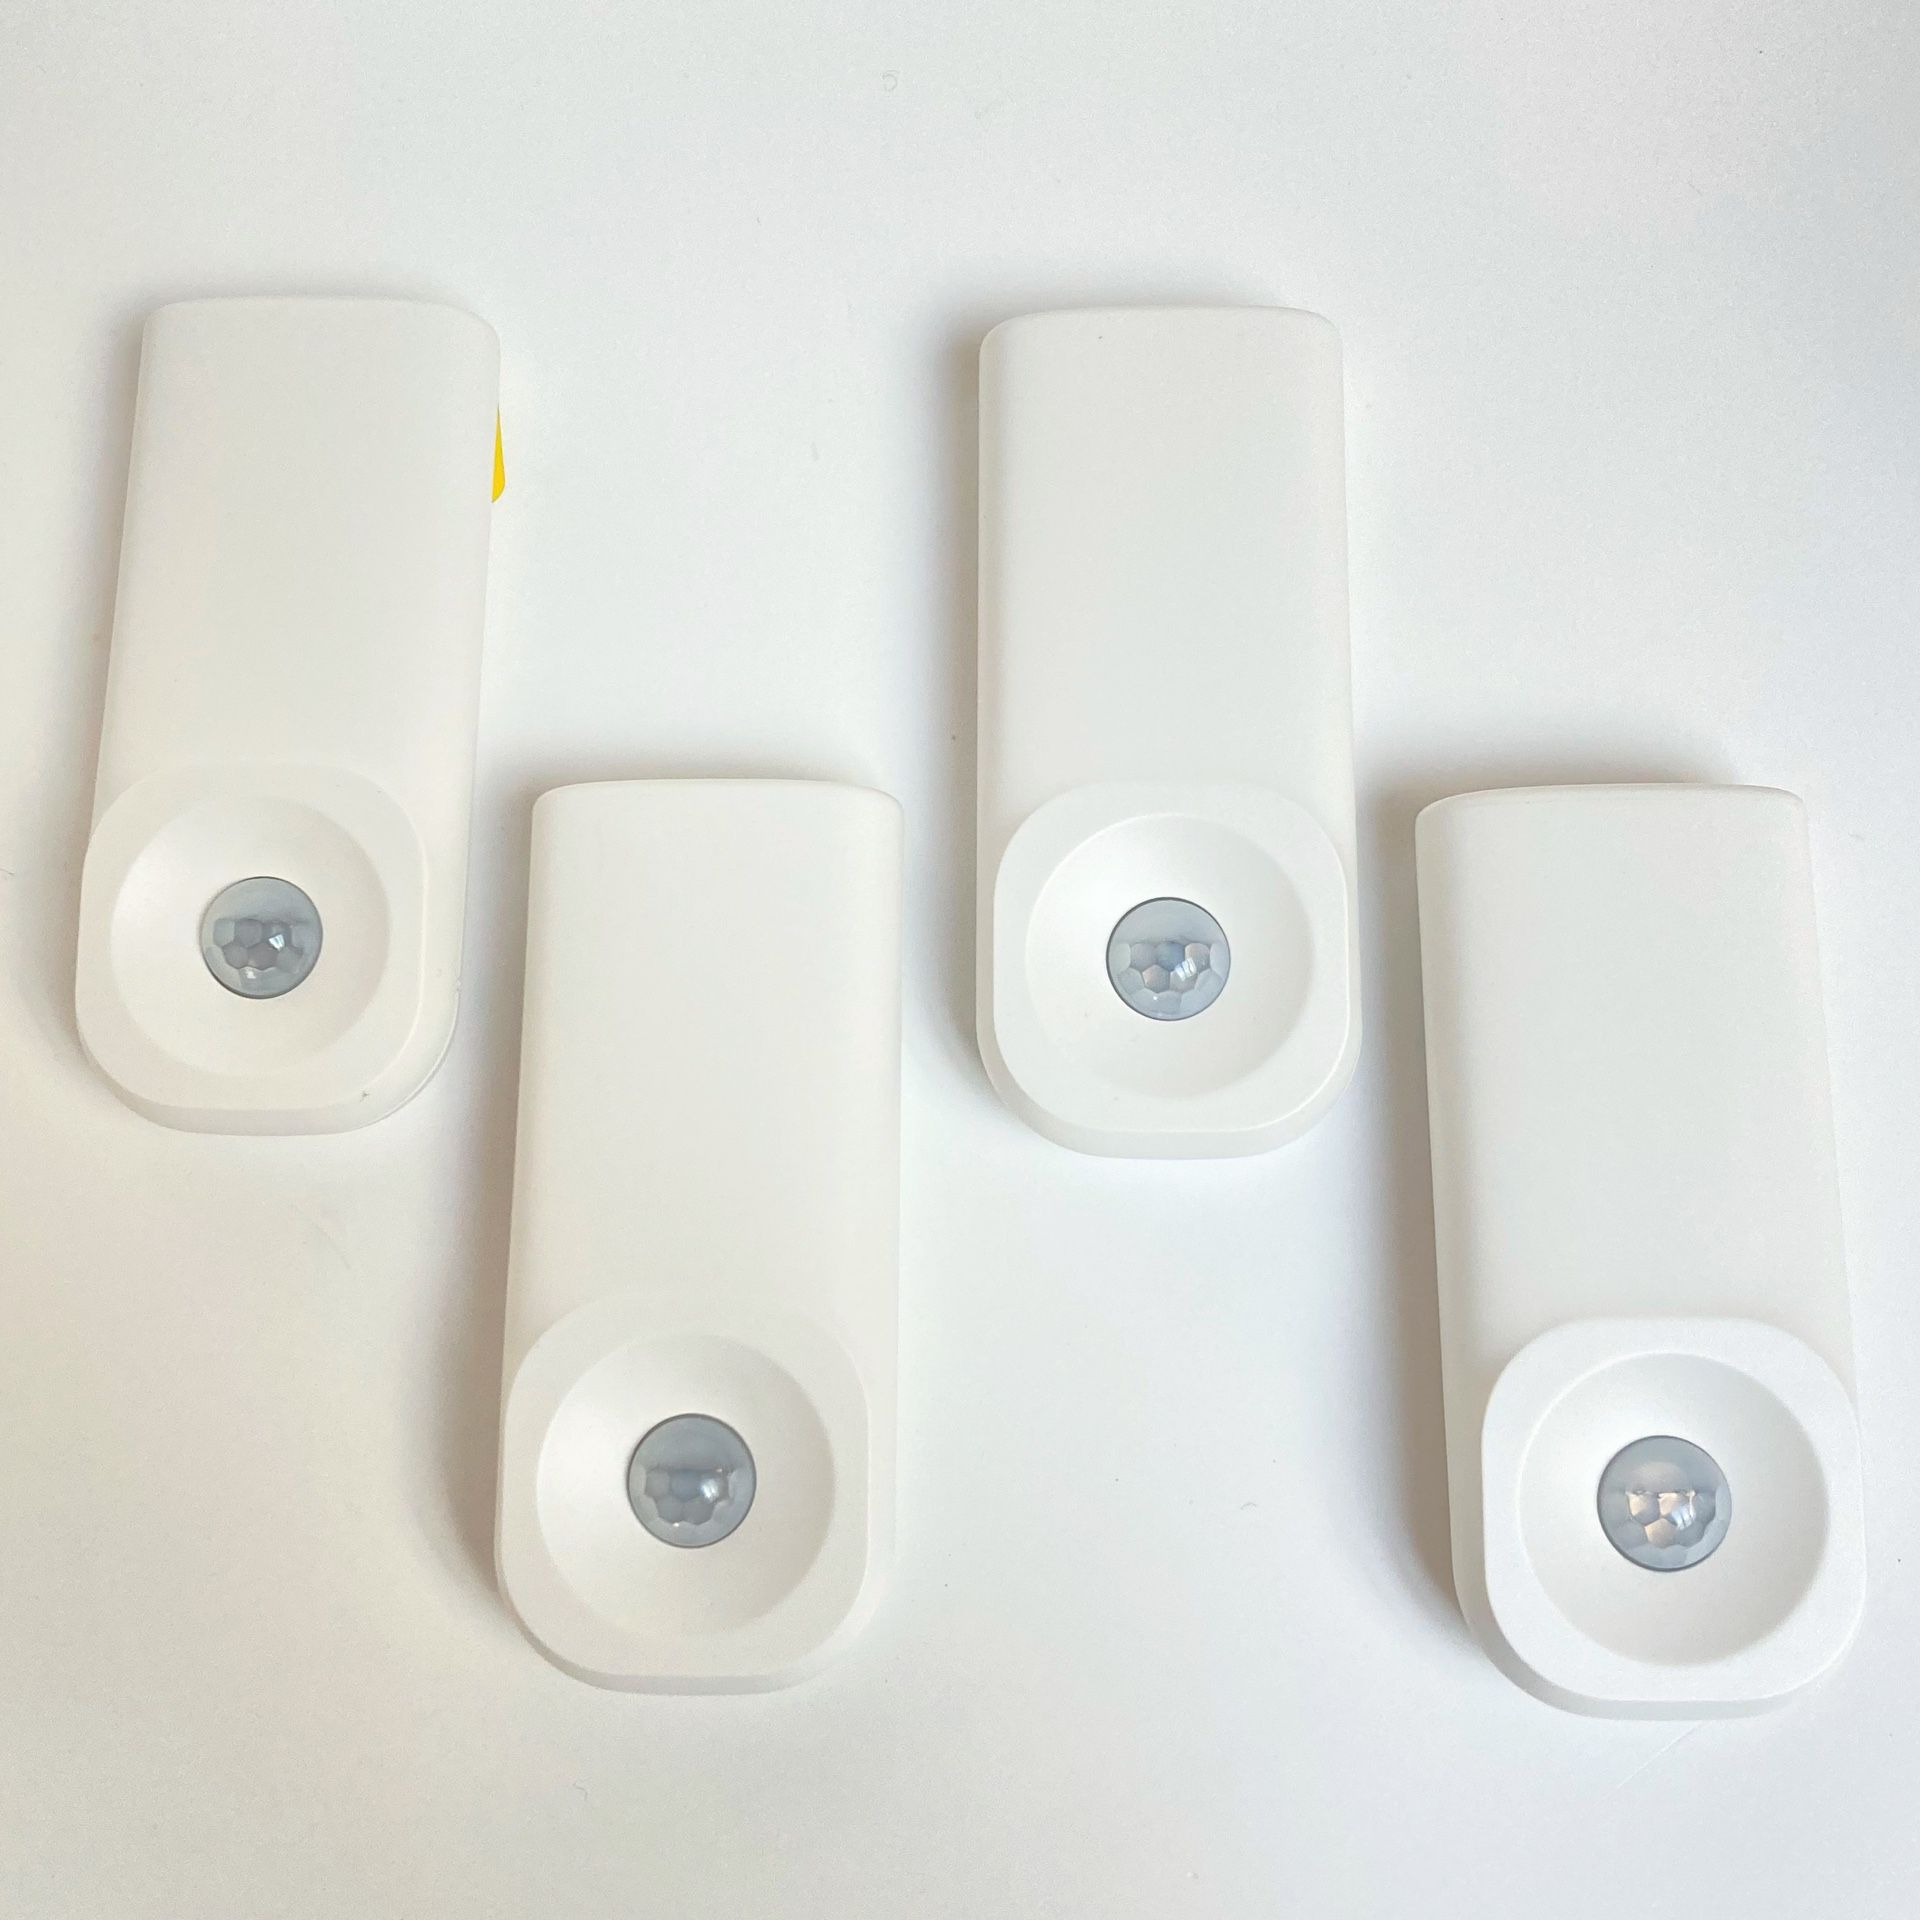 Set of (4) New Kangaroo Home Security Motion Sensors